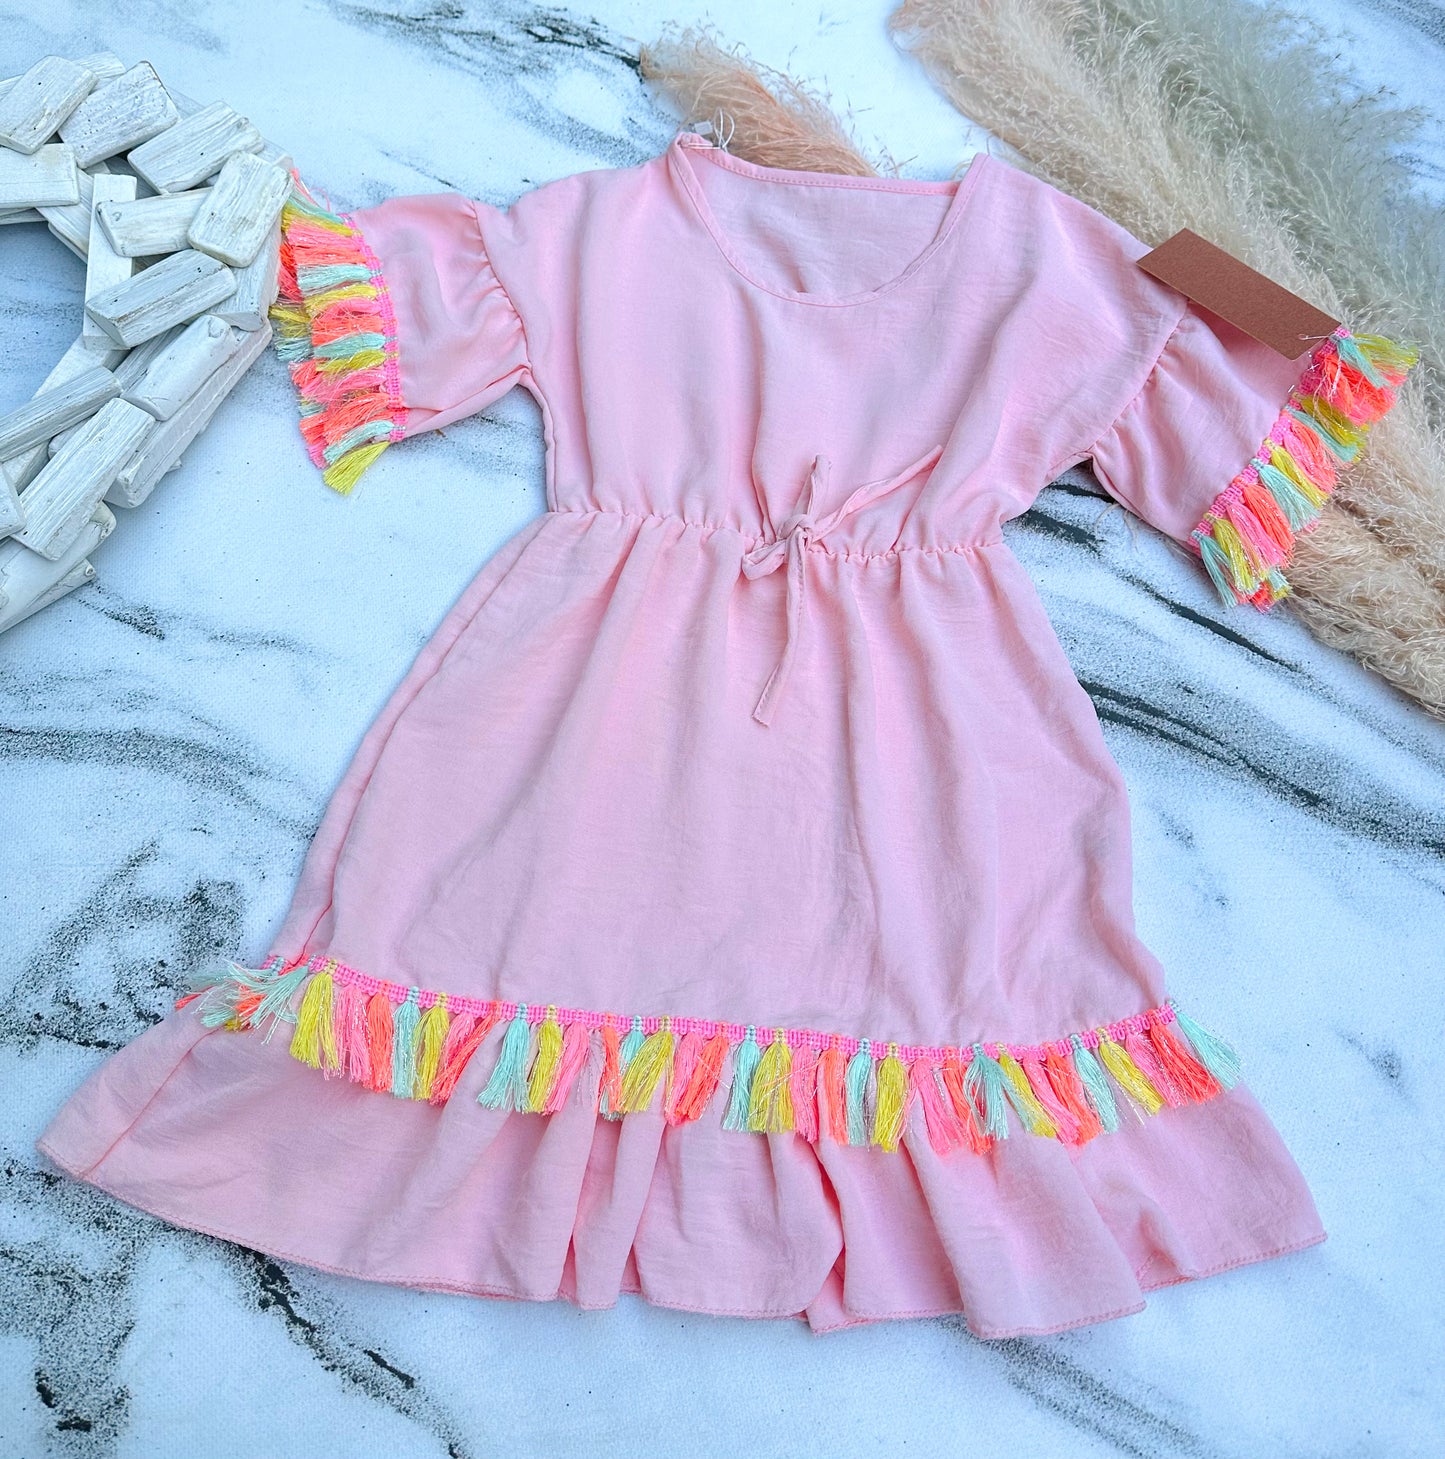 Pink boho style dress